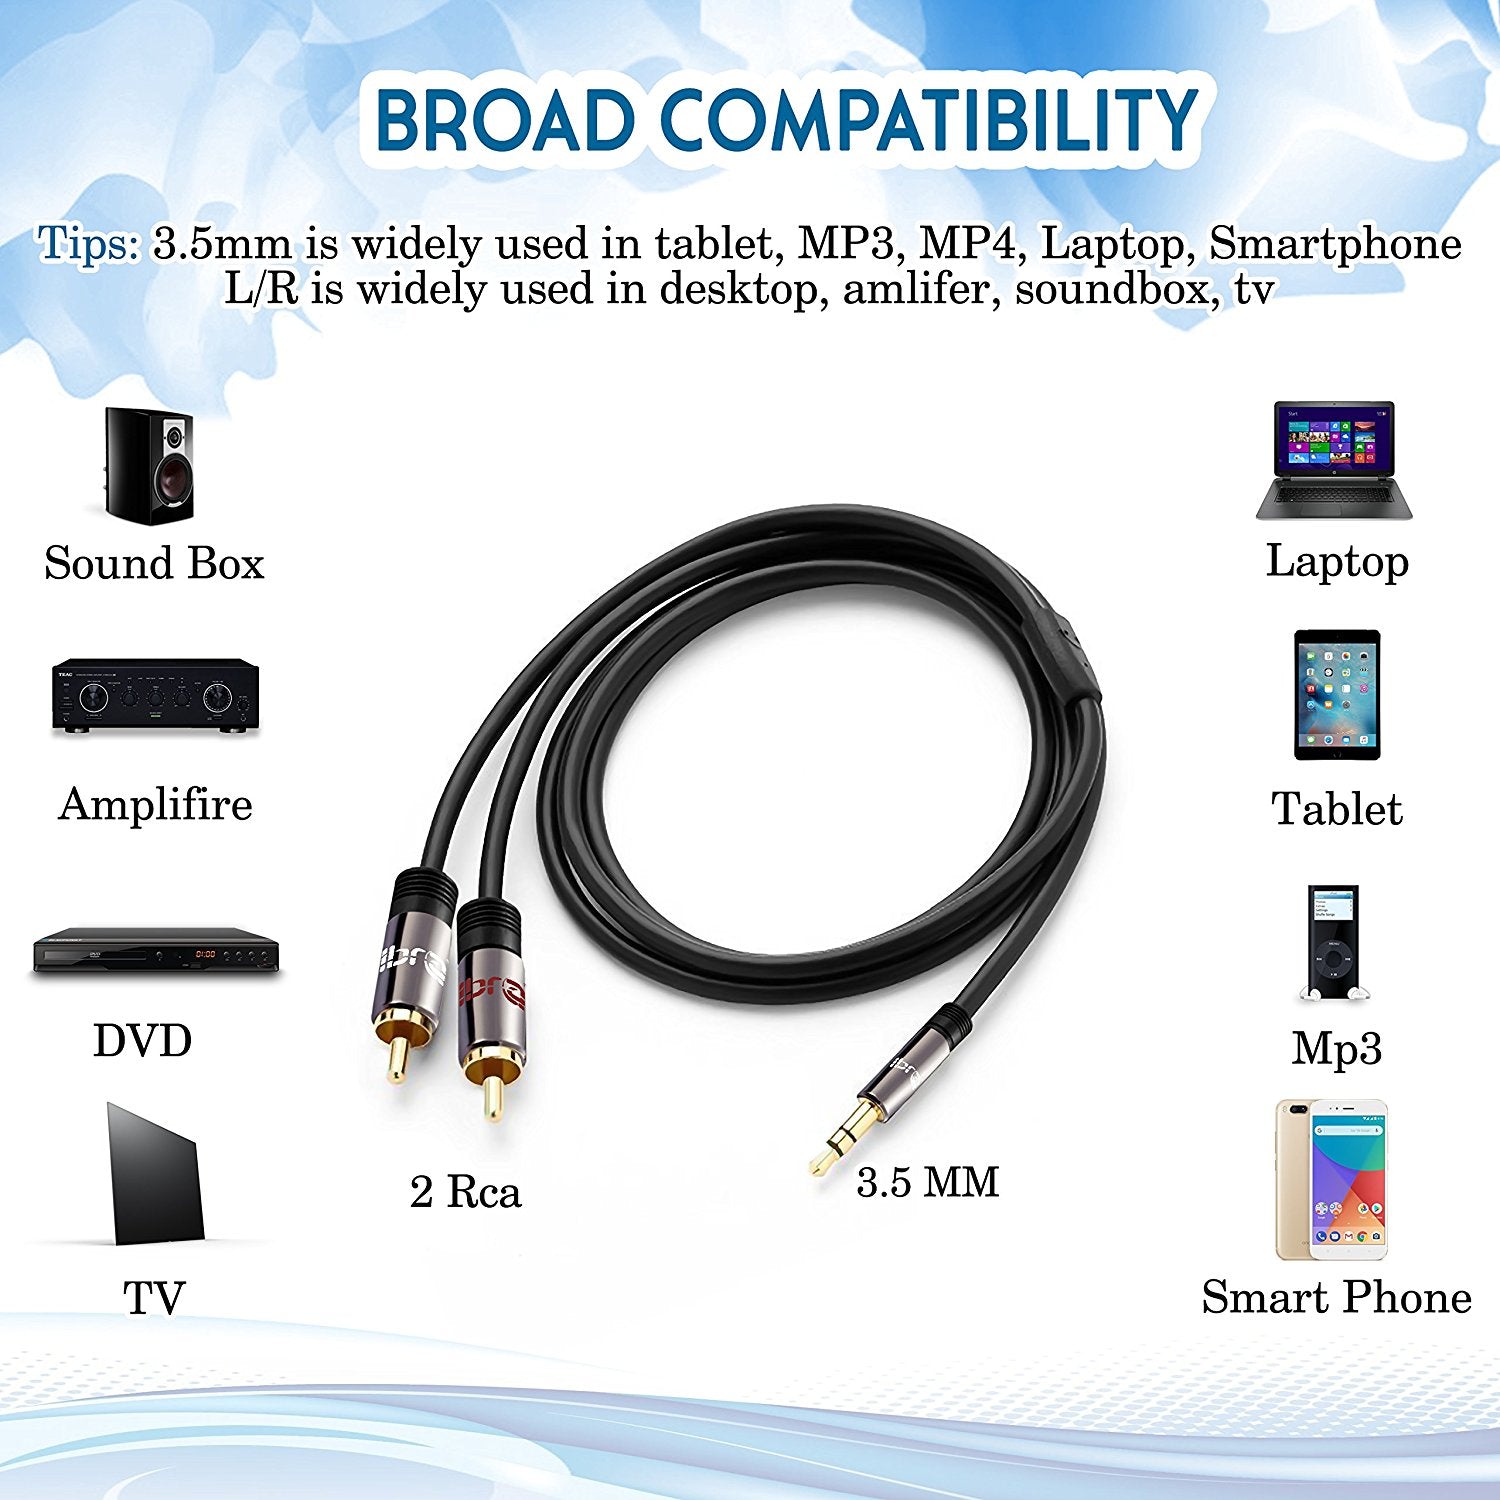 3.5mm Jack Plug to Phono Cable 3m Premium